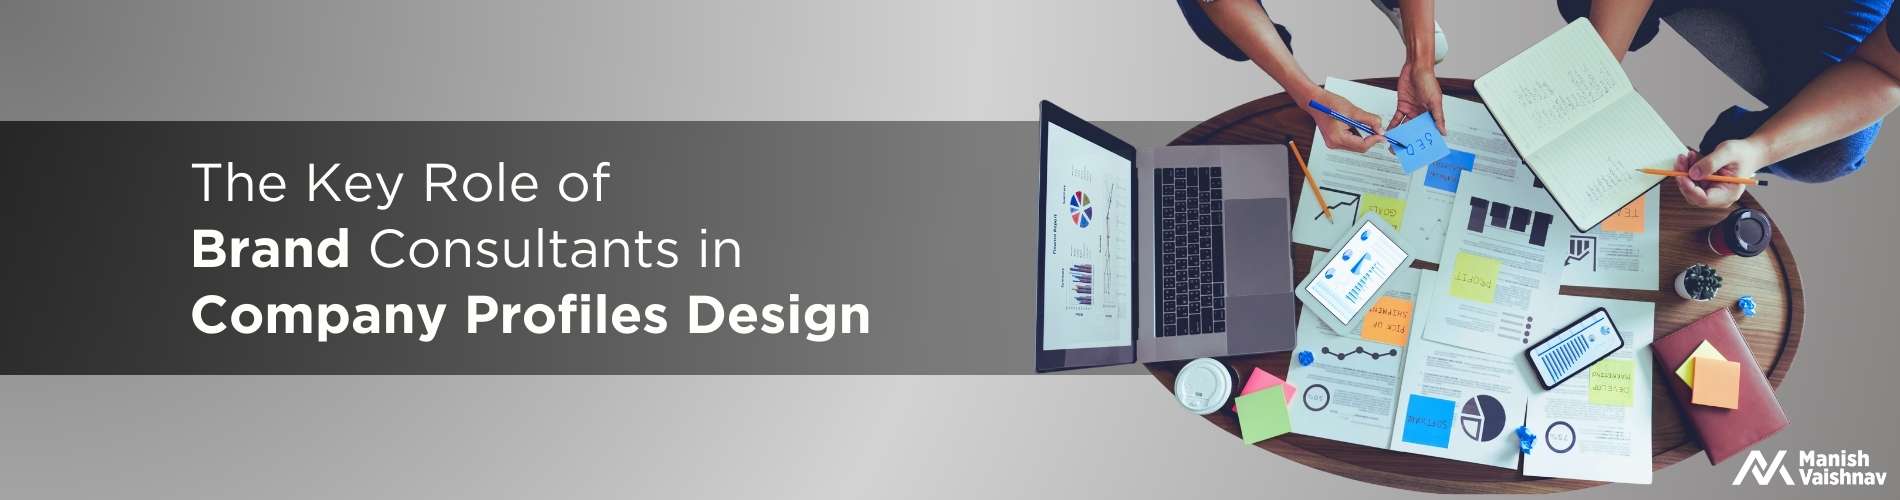 The Key Role of Brand Consultants in Company Profile Design - Banner, company profile design services, profile designer